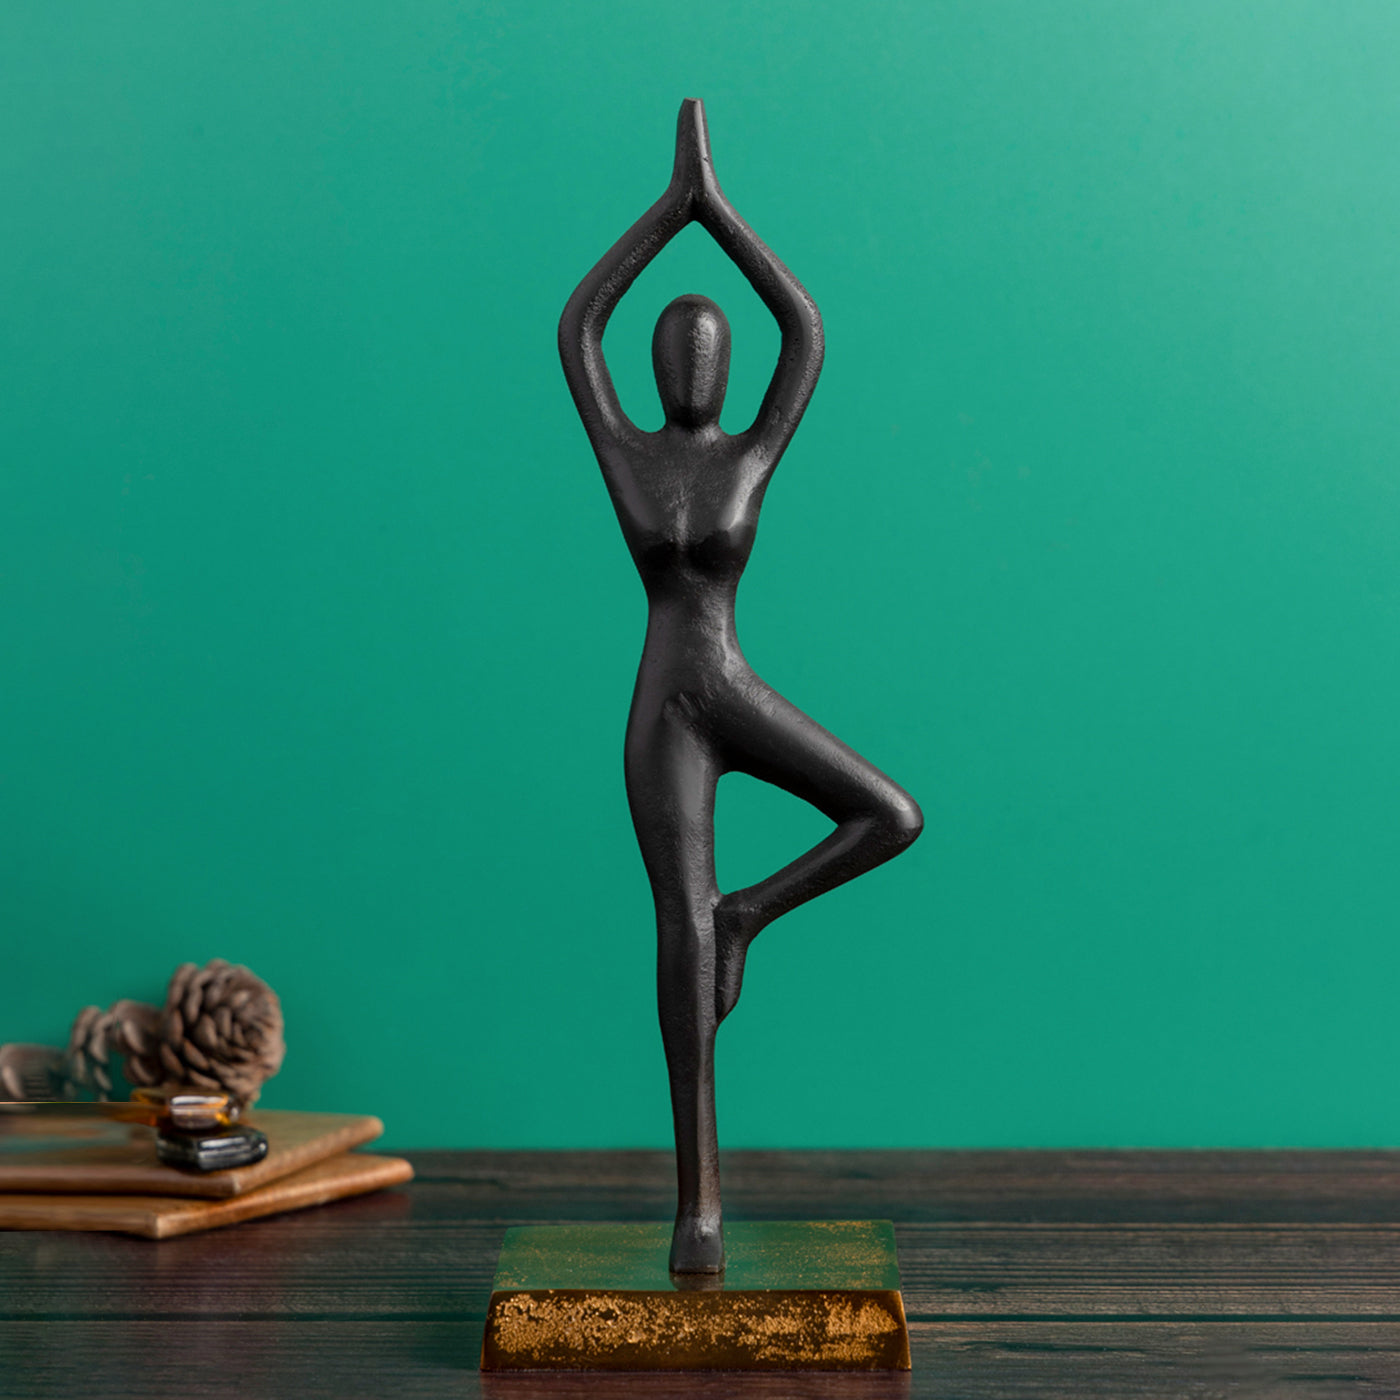 DecorTwist Brings Yoga Girl showpiece for Living Room, Home Decor, Table Decor Office Desk Shelf Birthday Gift